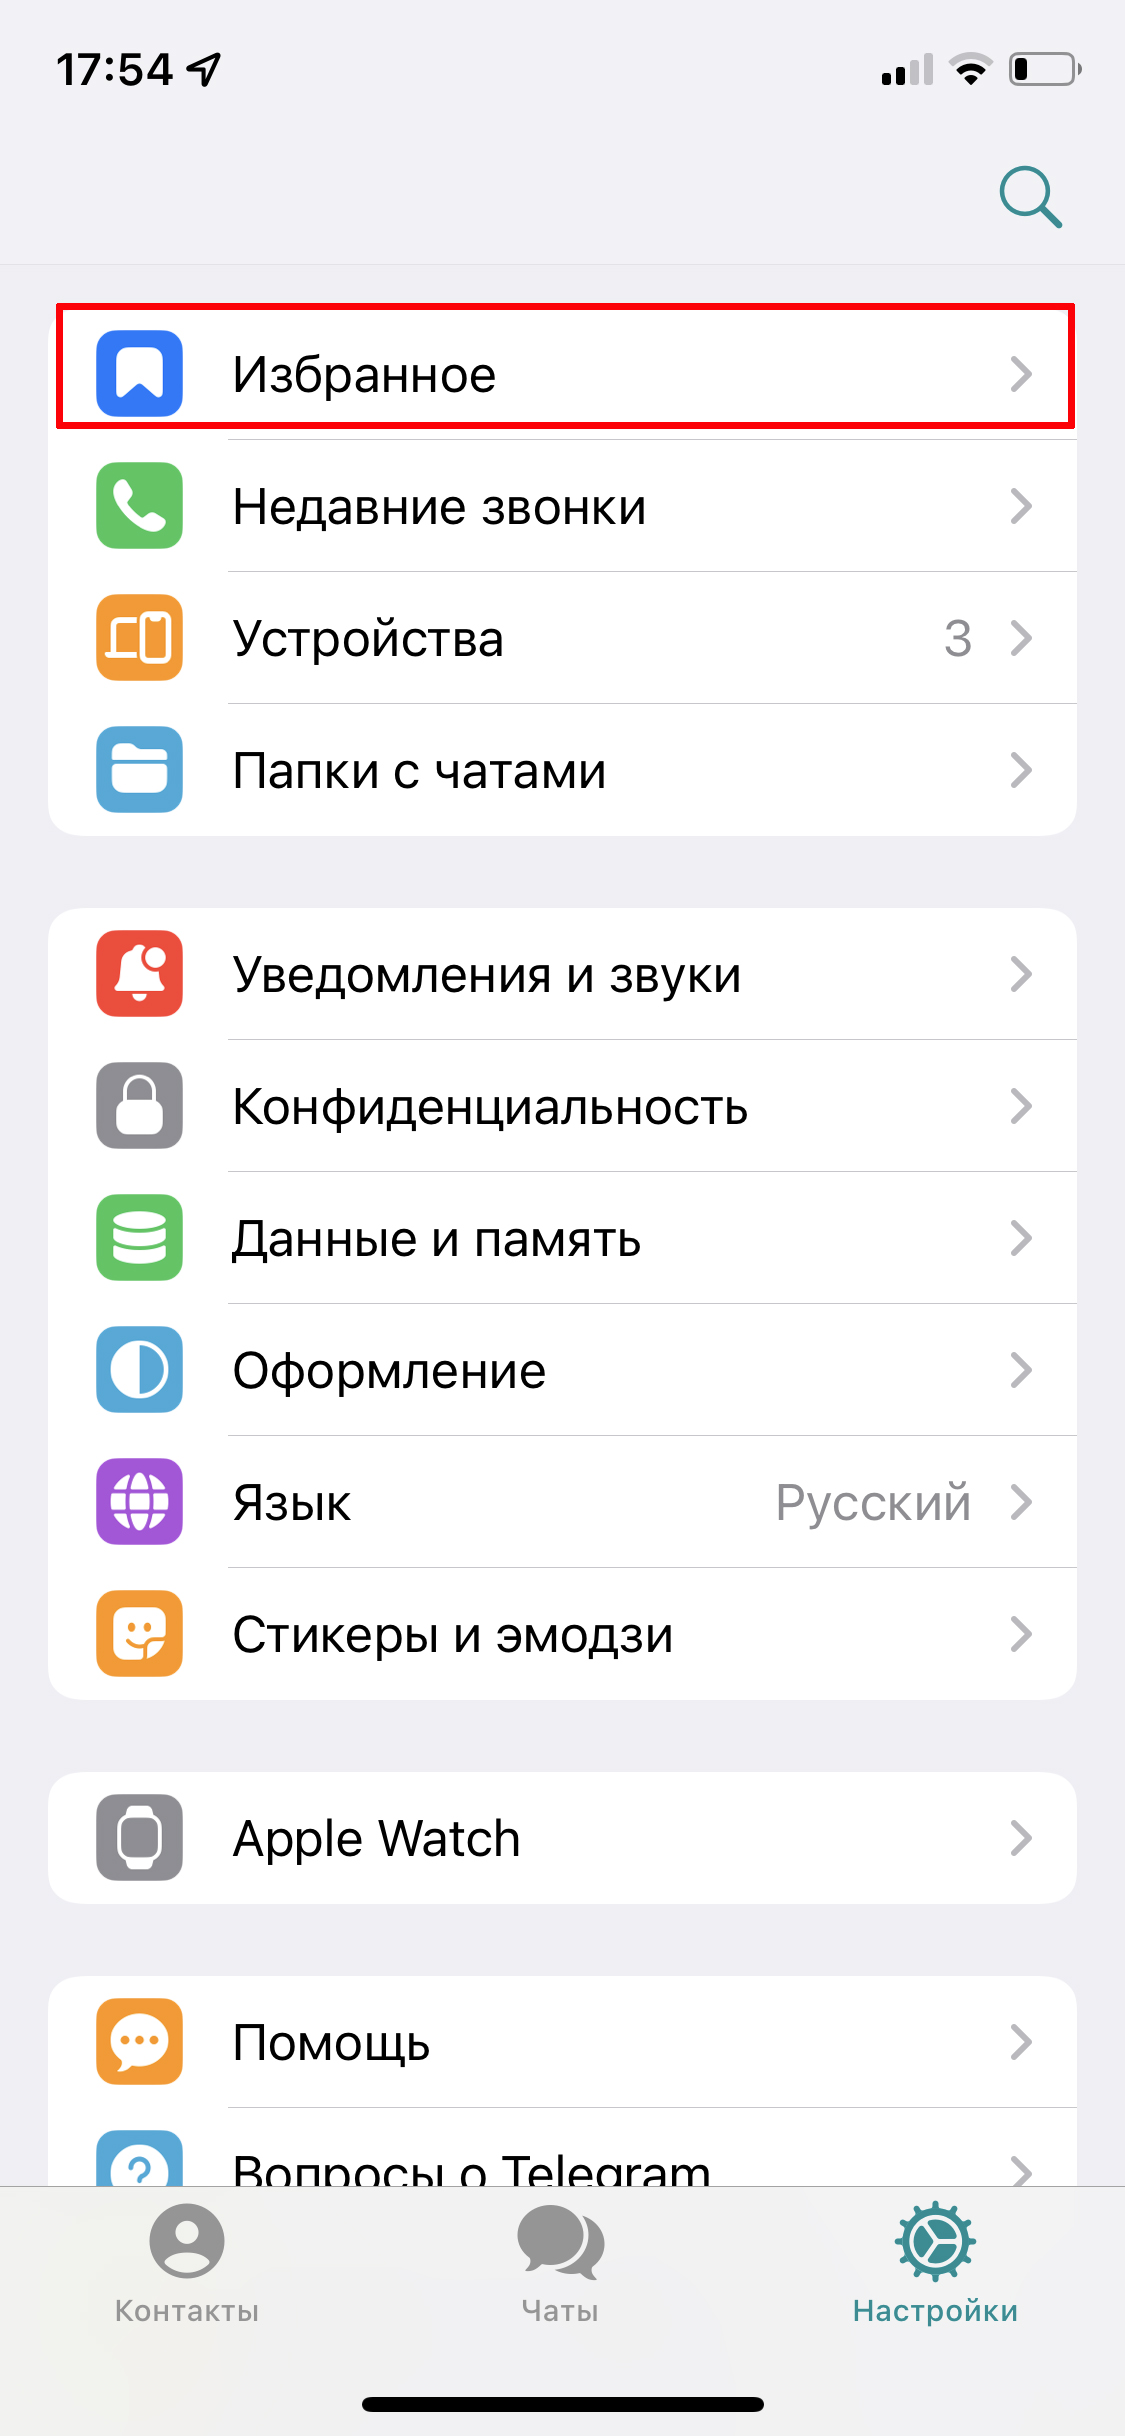 Телеграмма перевести на русский язык андроиде как фото 59